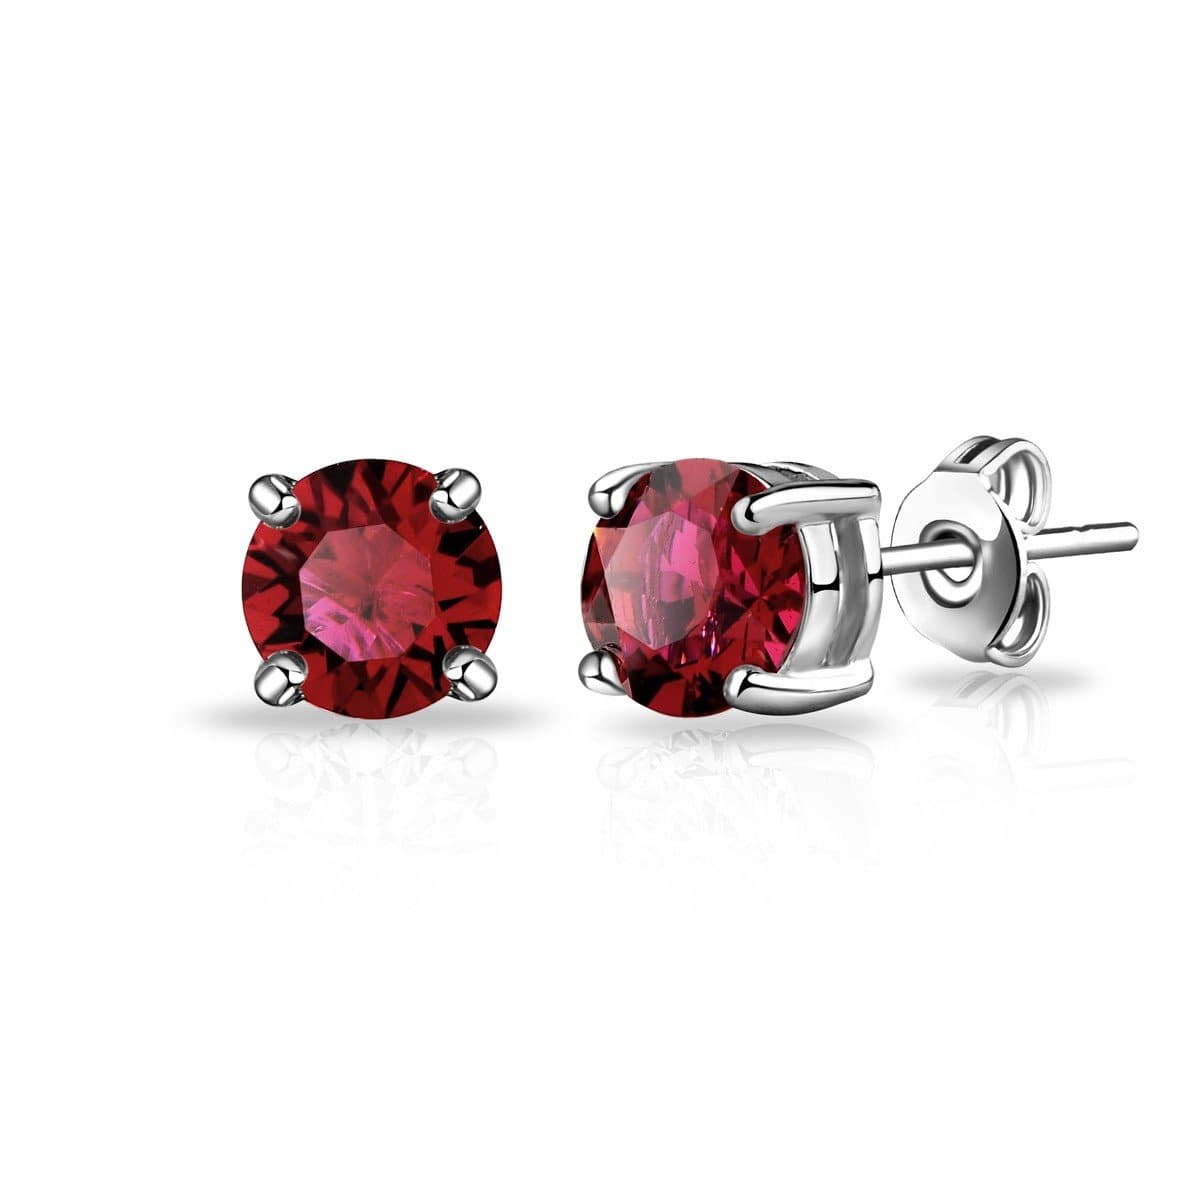 Dark Red Stud Earrings Created with Zircondia® Crystals by Philip Jones Jewellery